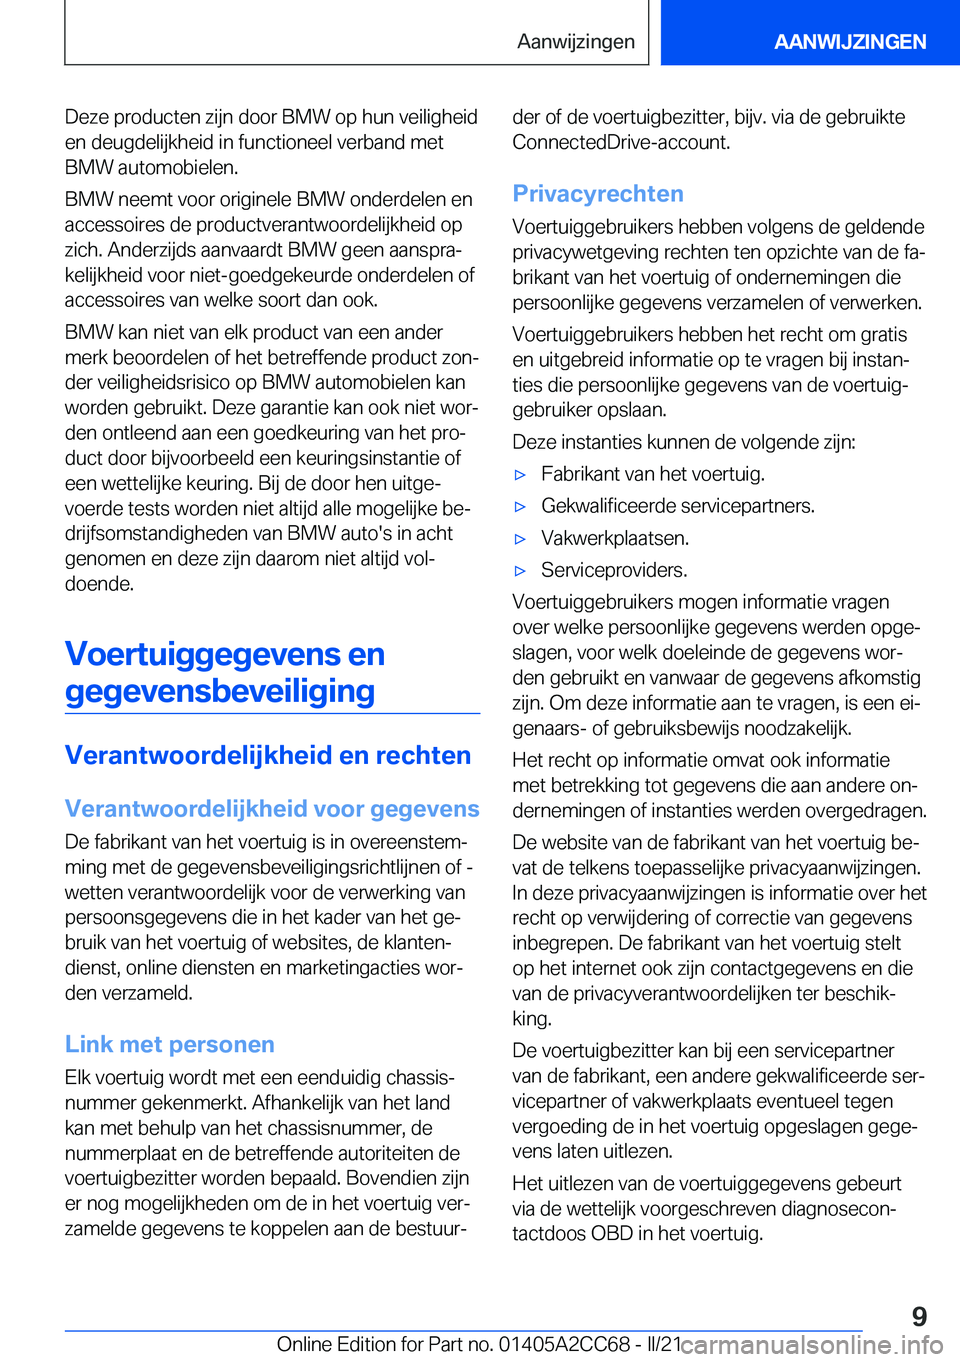 BMW 8 SERIES GRAN COUPE 2022  Instructieboekjes (in Dutch) �D�e�z�e��p�r�o�d�u�c�t�e�n��z�i�j�n��d�o�o�r��B�M�W��o�p��h�u�n��v�e�i�l�i�g�h�e�i�d�e�n��d�e�u�g�d�e�l�i�j�k�h�e�i�d��i�n��f�u�n�c�t�i�o�n�e�e�l��v�e�r�b�a�n�d��m�e�t�B�M�W��a�u�t�o�m�o